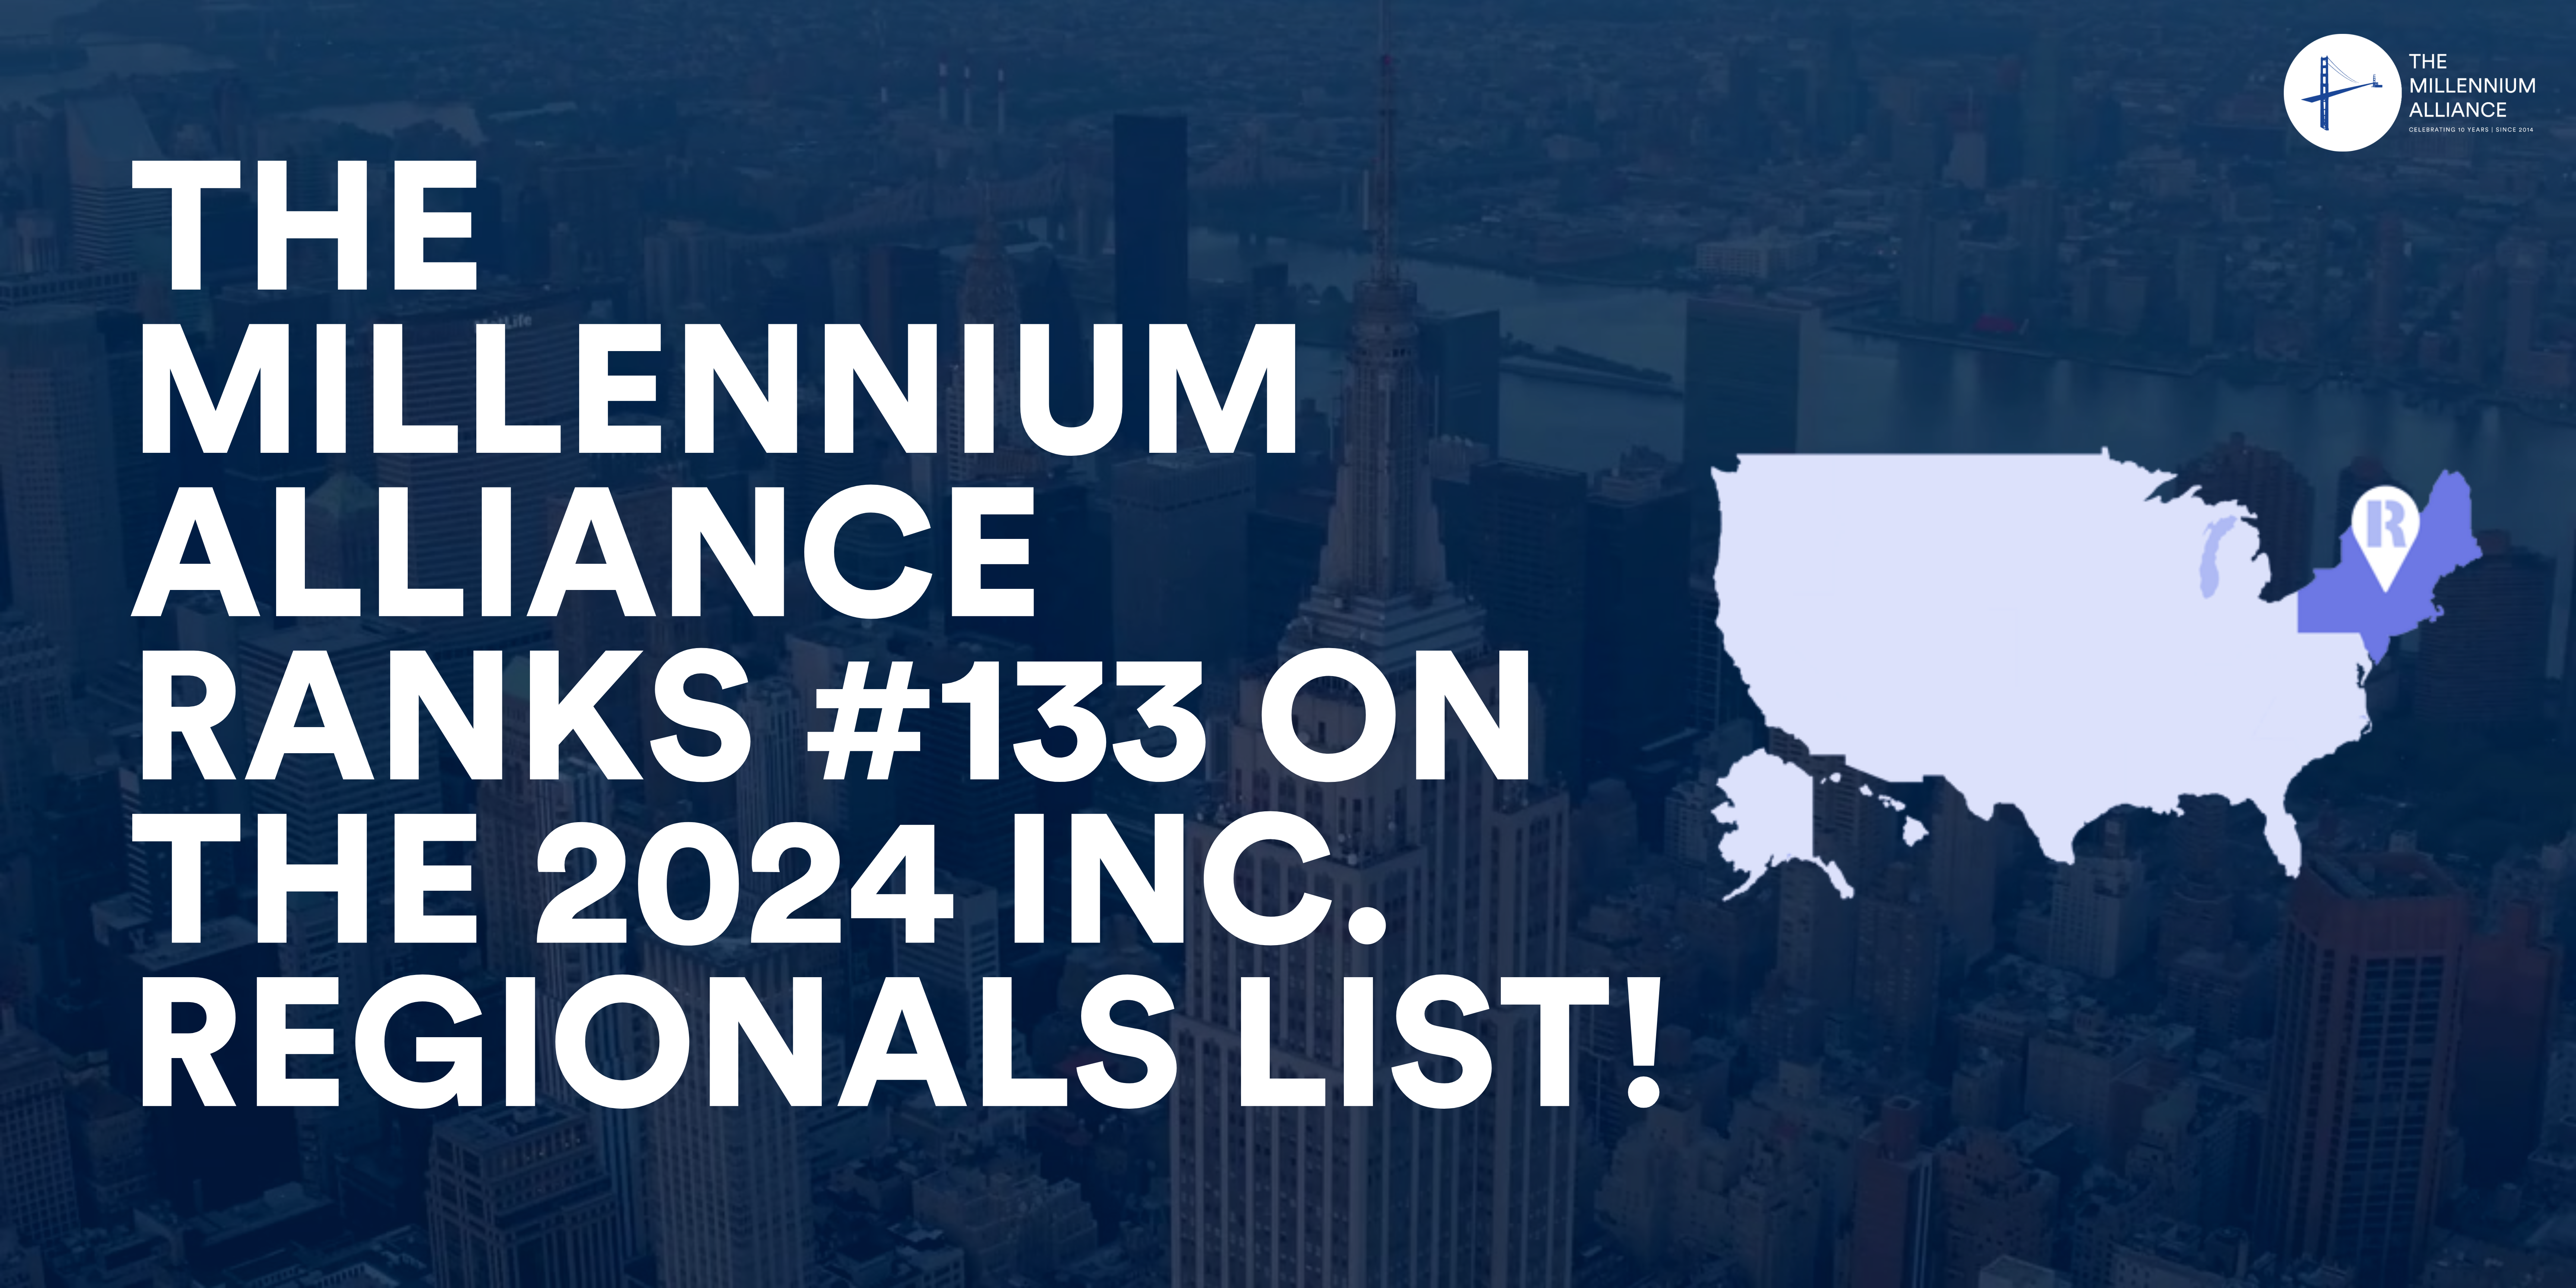 The Millennium Alliance Ranks No. 133 on the 2024 Inc. Regionals List